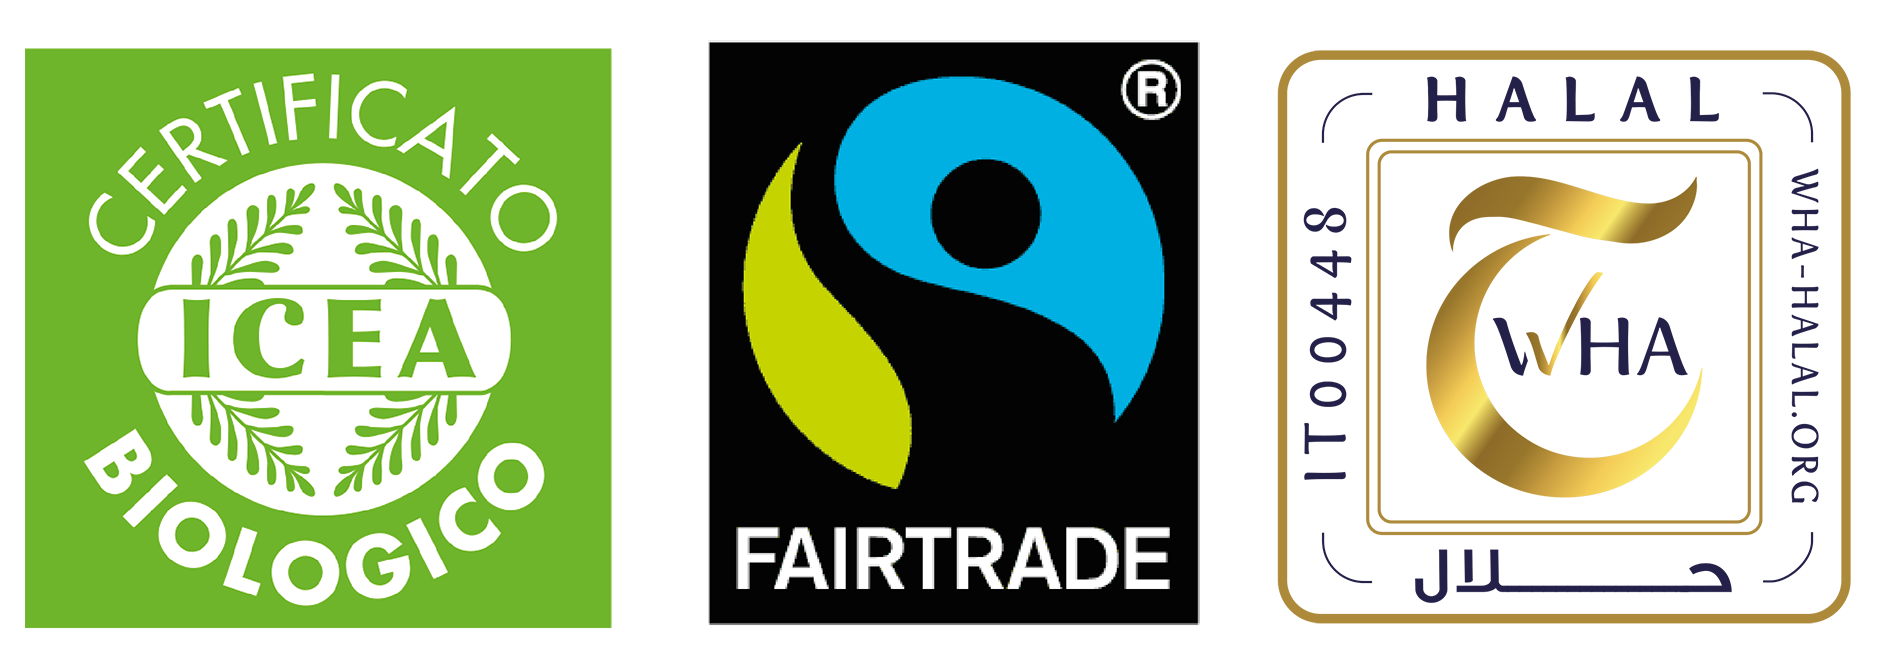 Francocaffe certified: Organic, Fairtrade and Halal